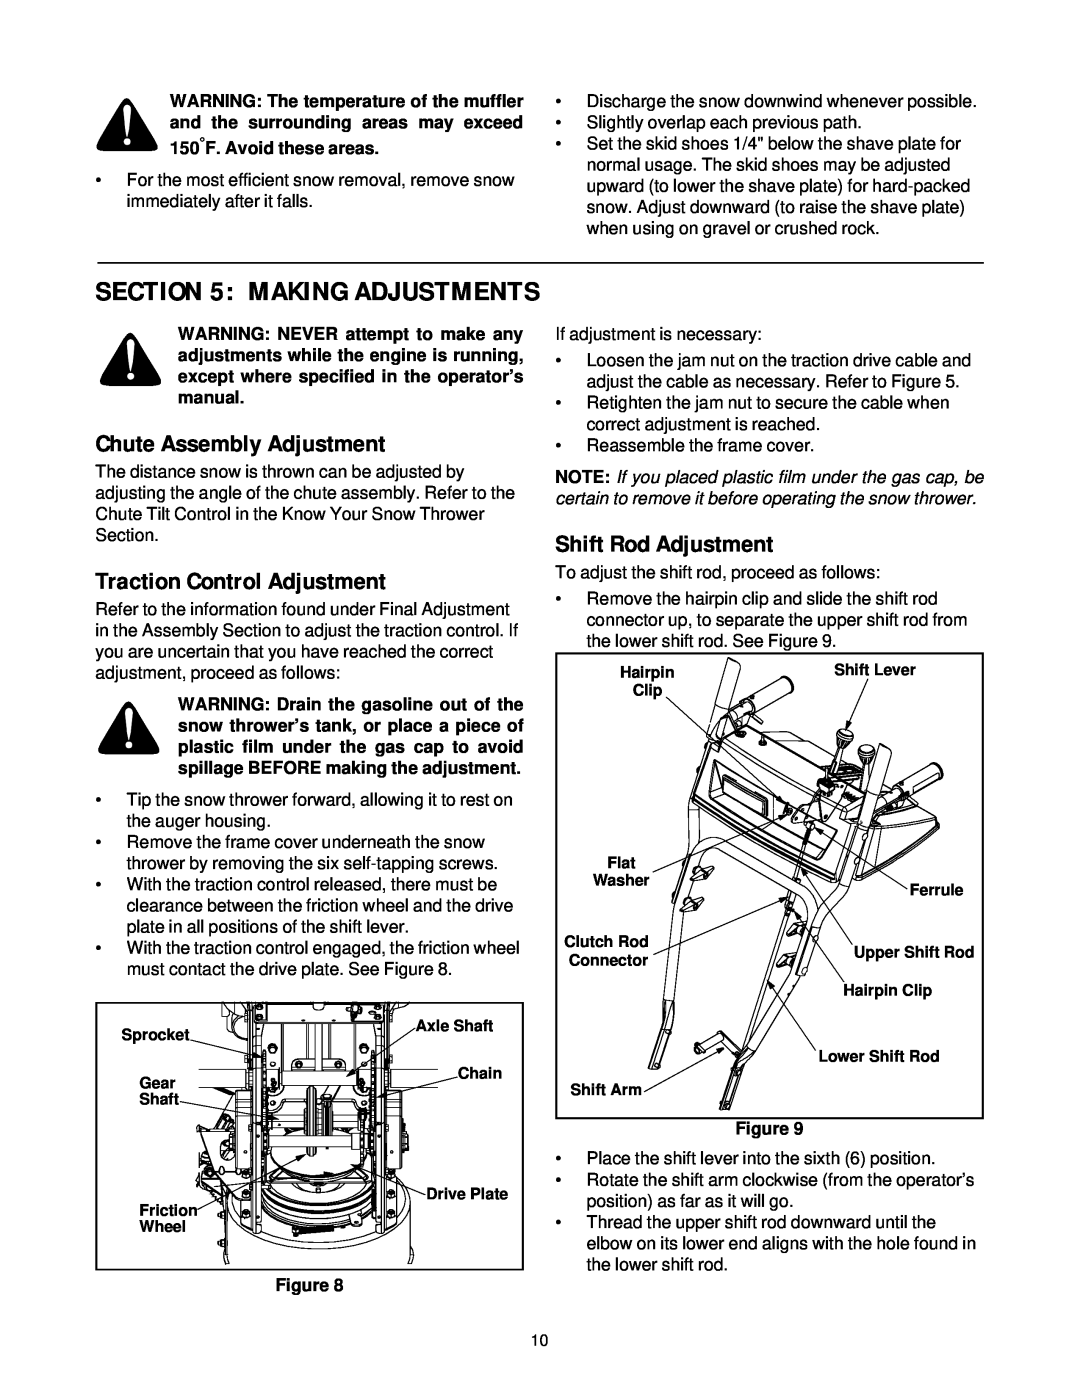 MTD 31AH5Q3G401 manual Chute Assembly Adjustment, Traction Control Adjustment, Shift Rod Adjustment, Making Adjustments 